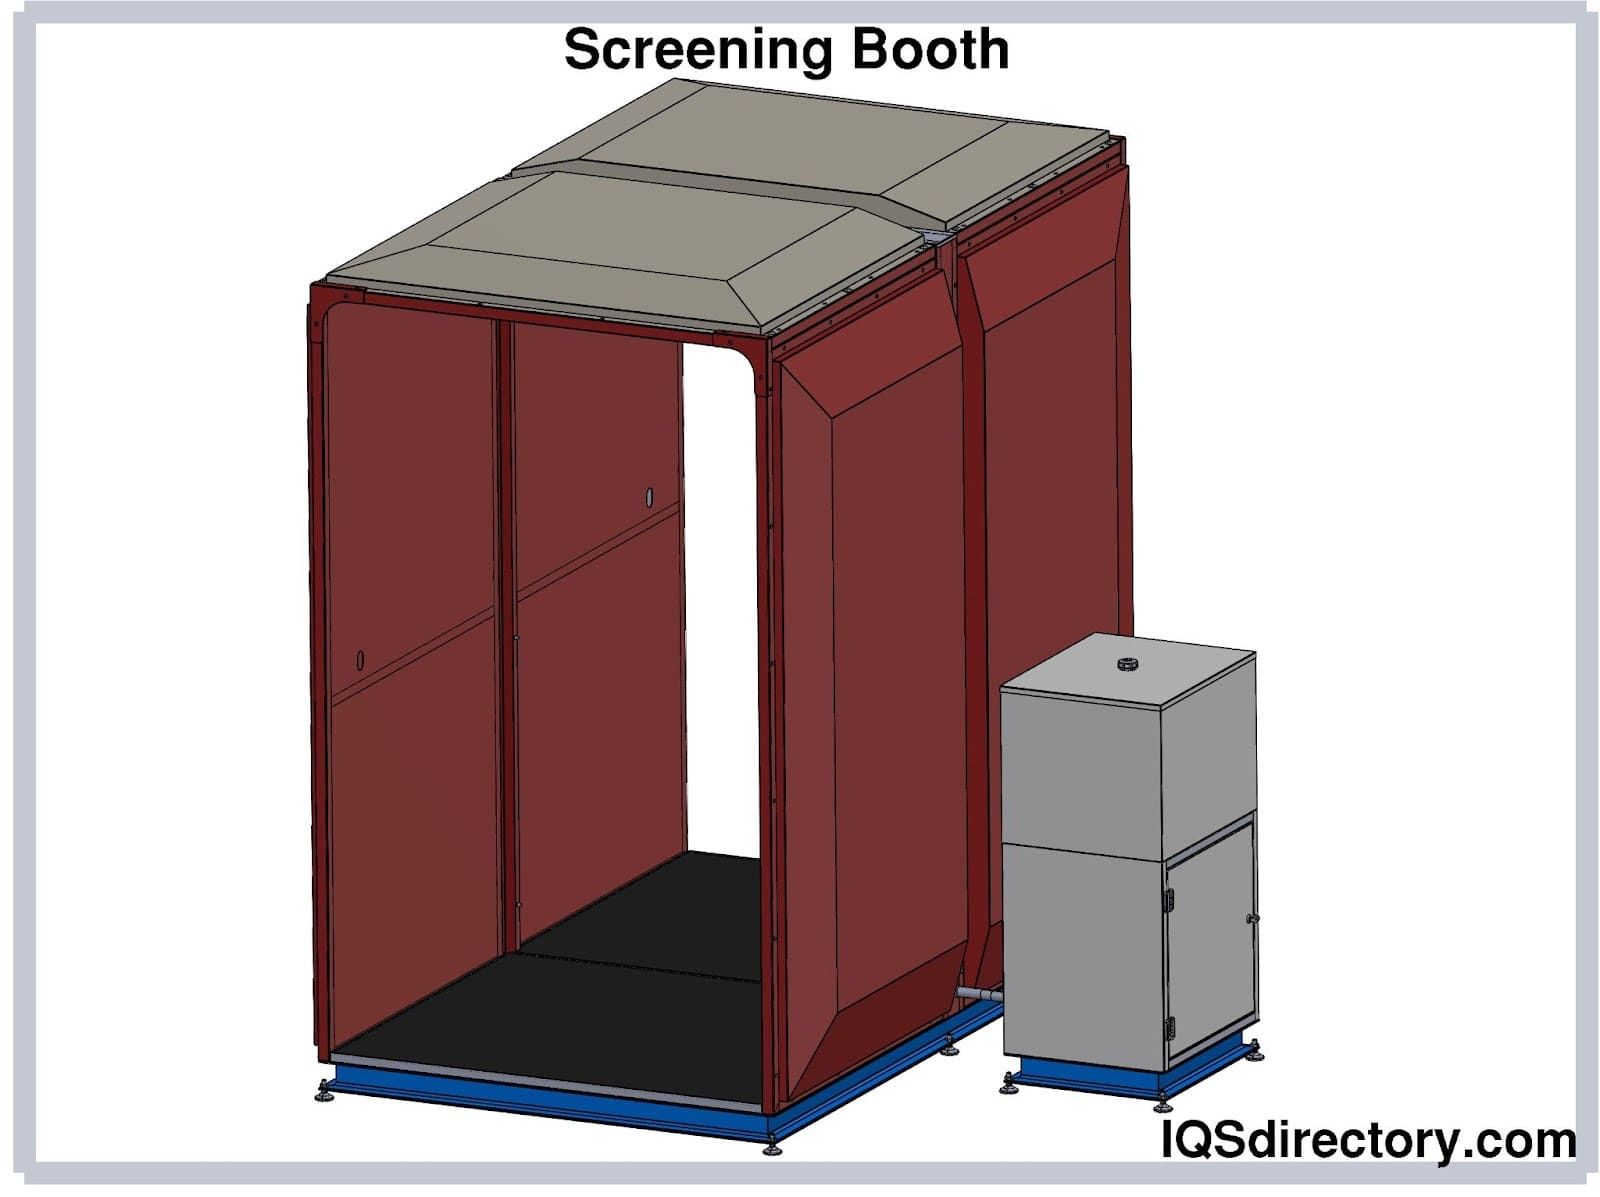 Screening Booth